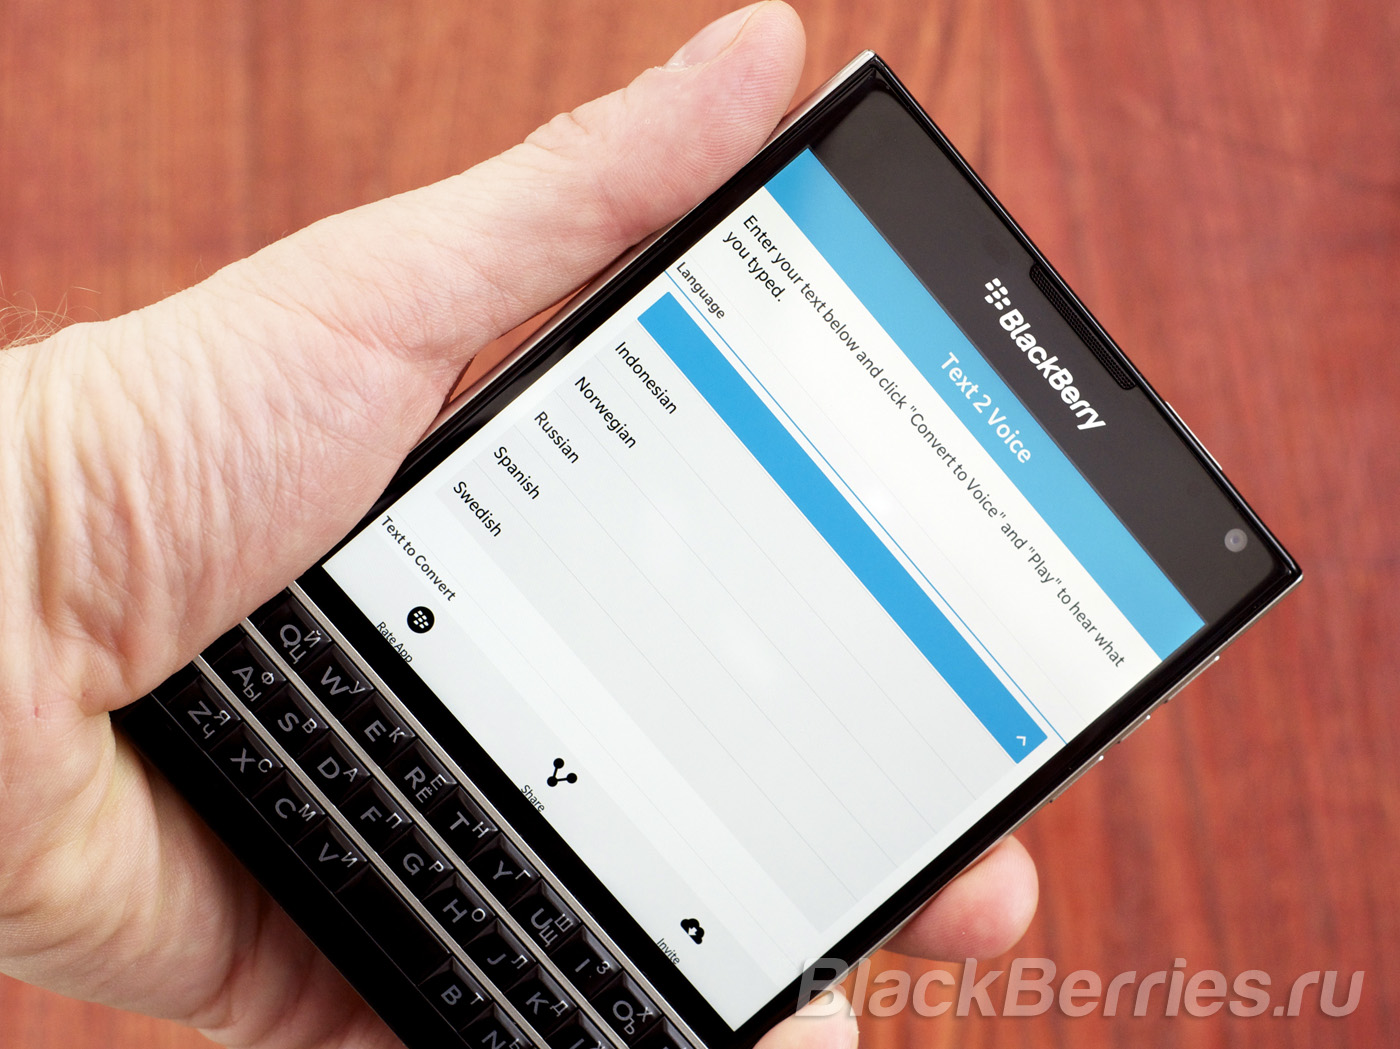 BlackBerry-Passport-Text2